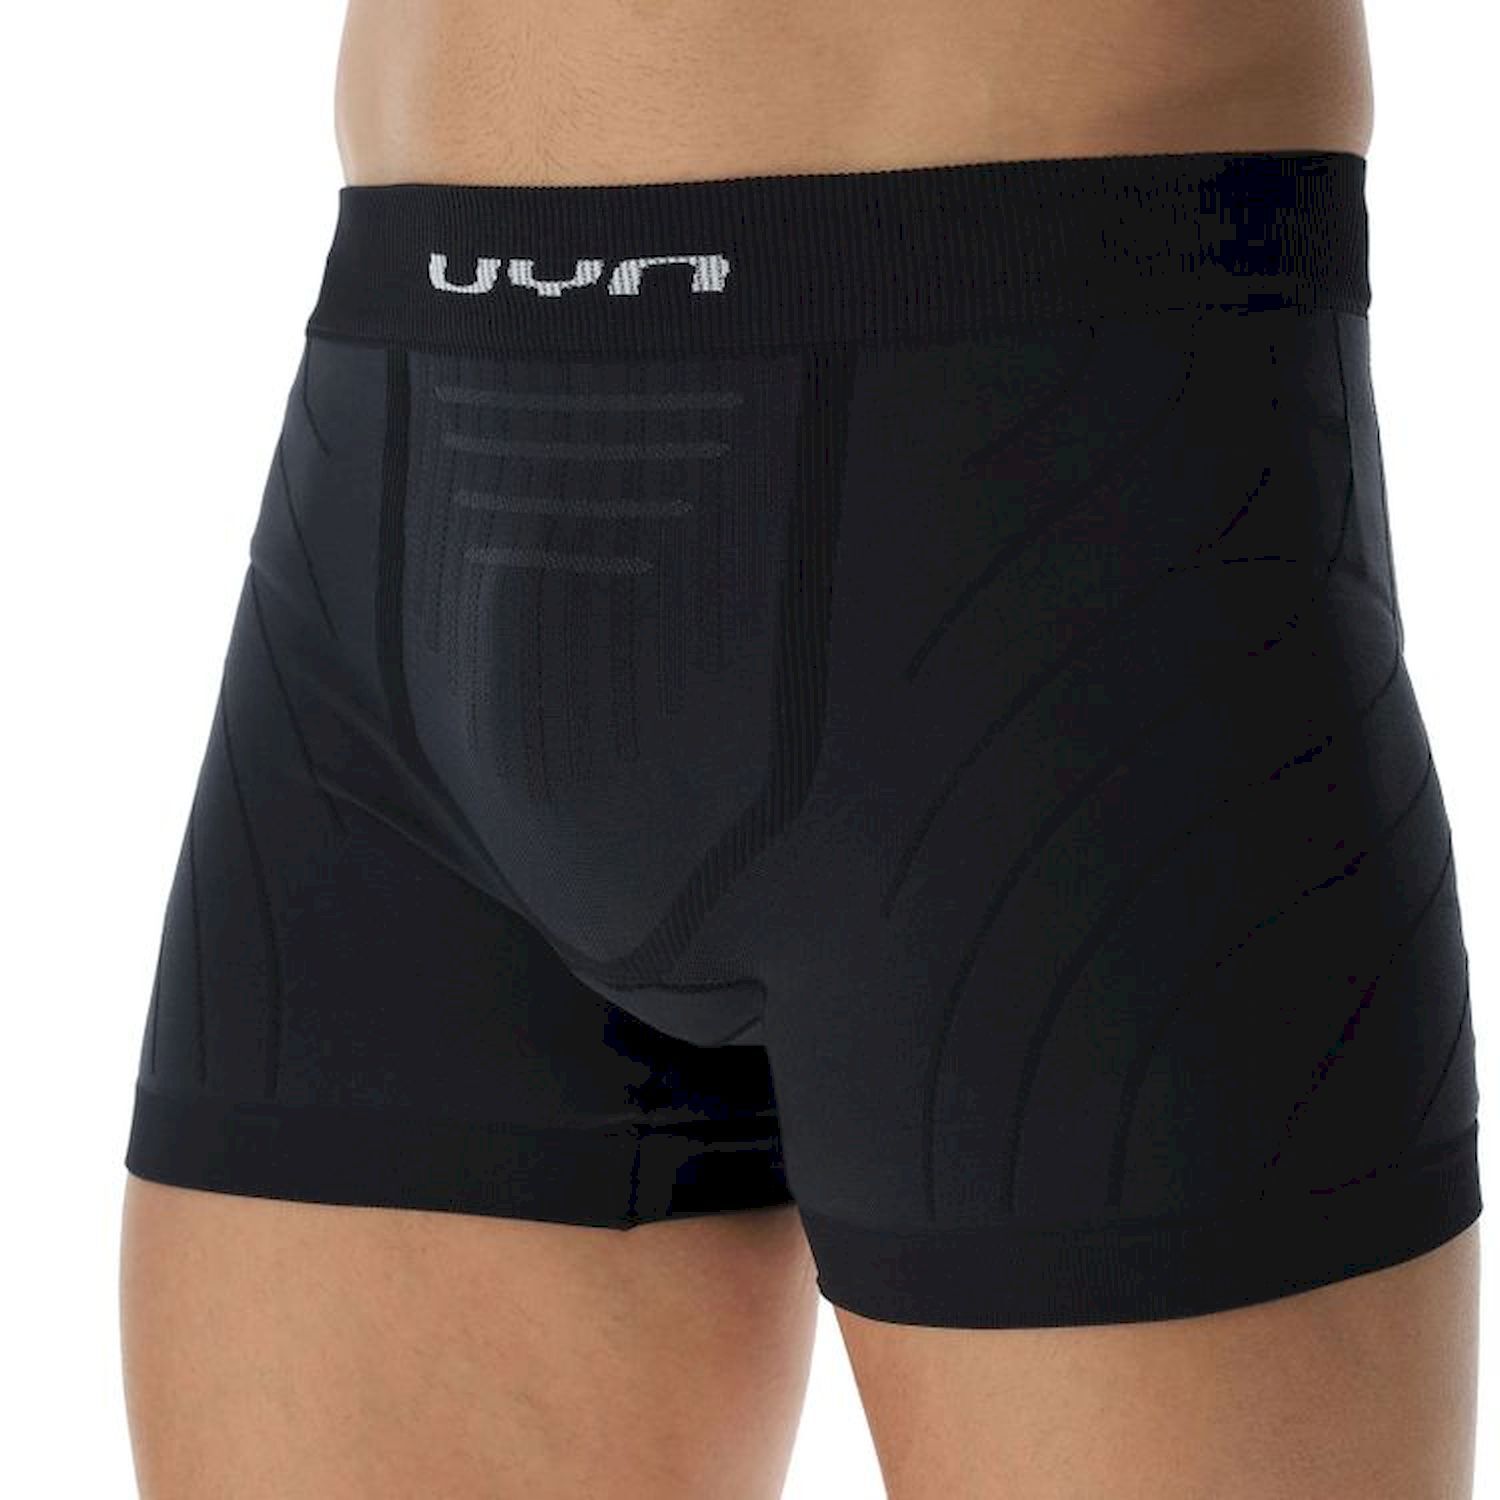 Uyn Motyon Uw Boxer With Pad - Underwear - Men's